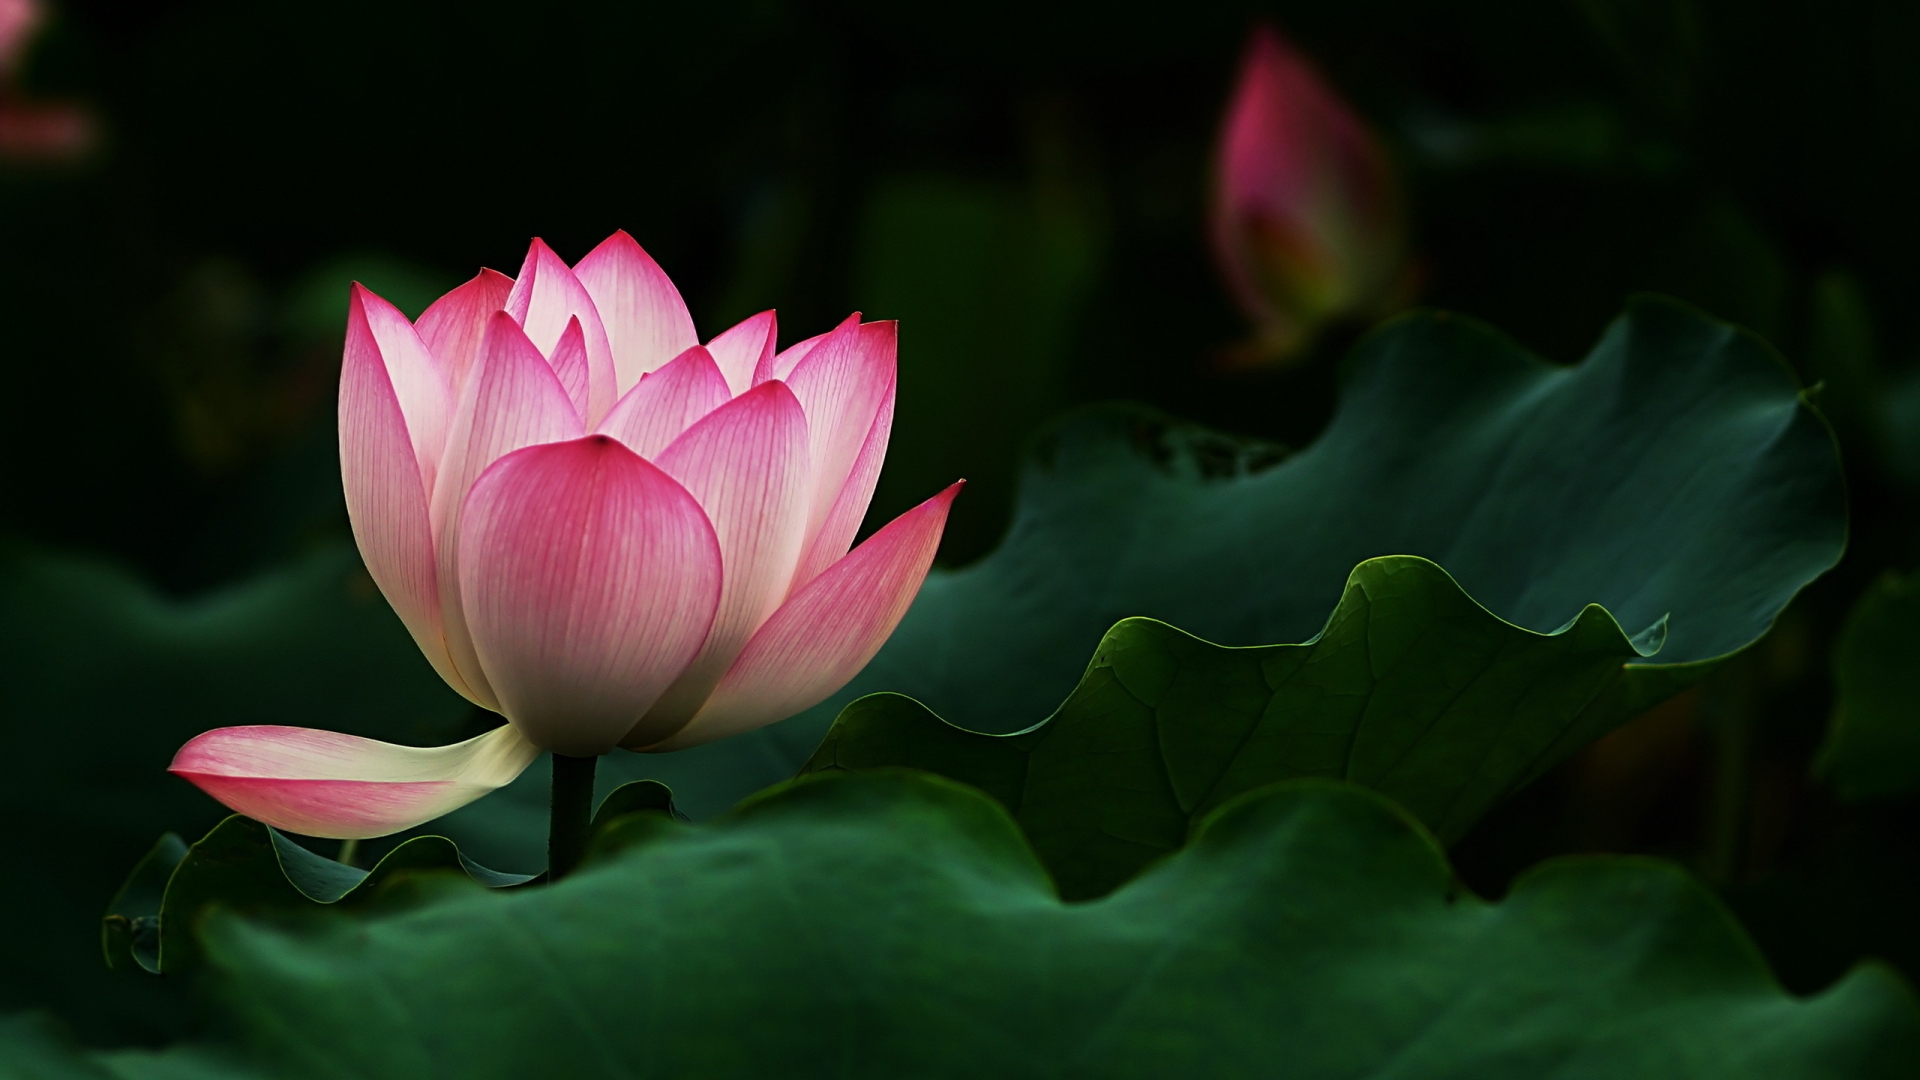 Beautiful Lotus Flower for 1920 x 1080 HDTV 1080p resolution